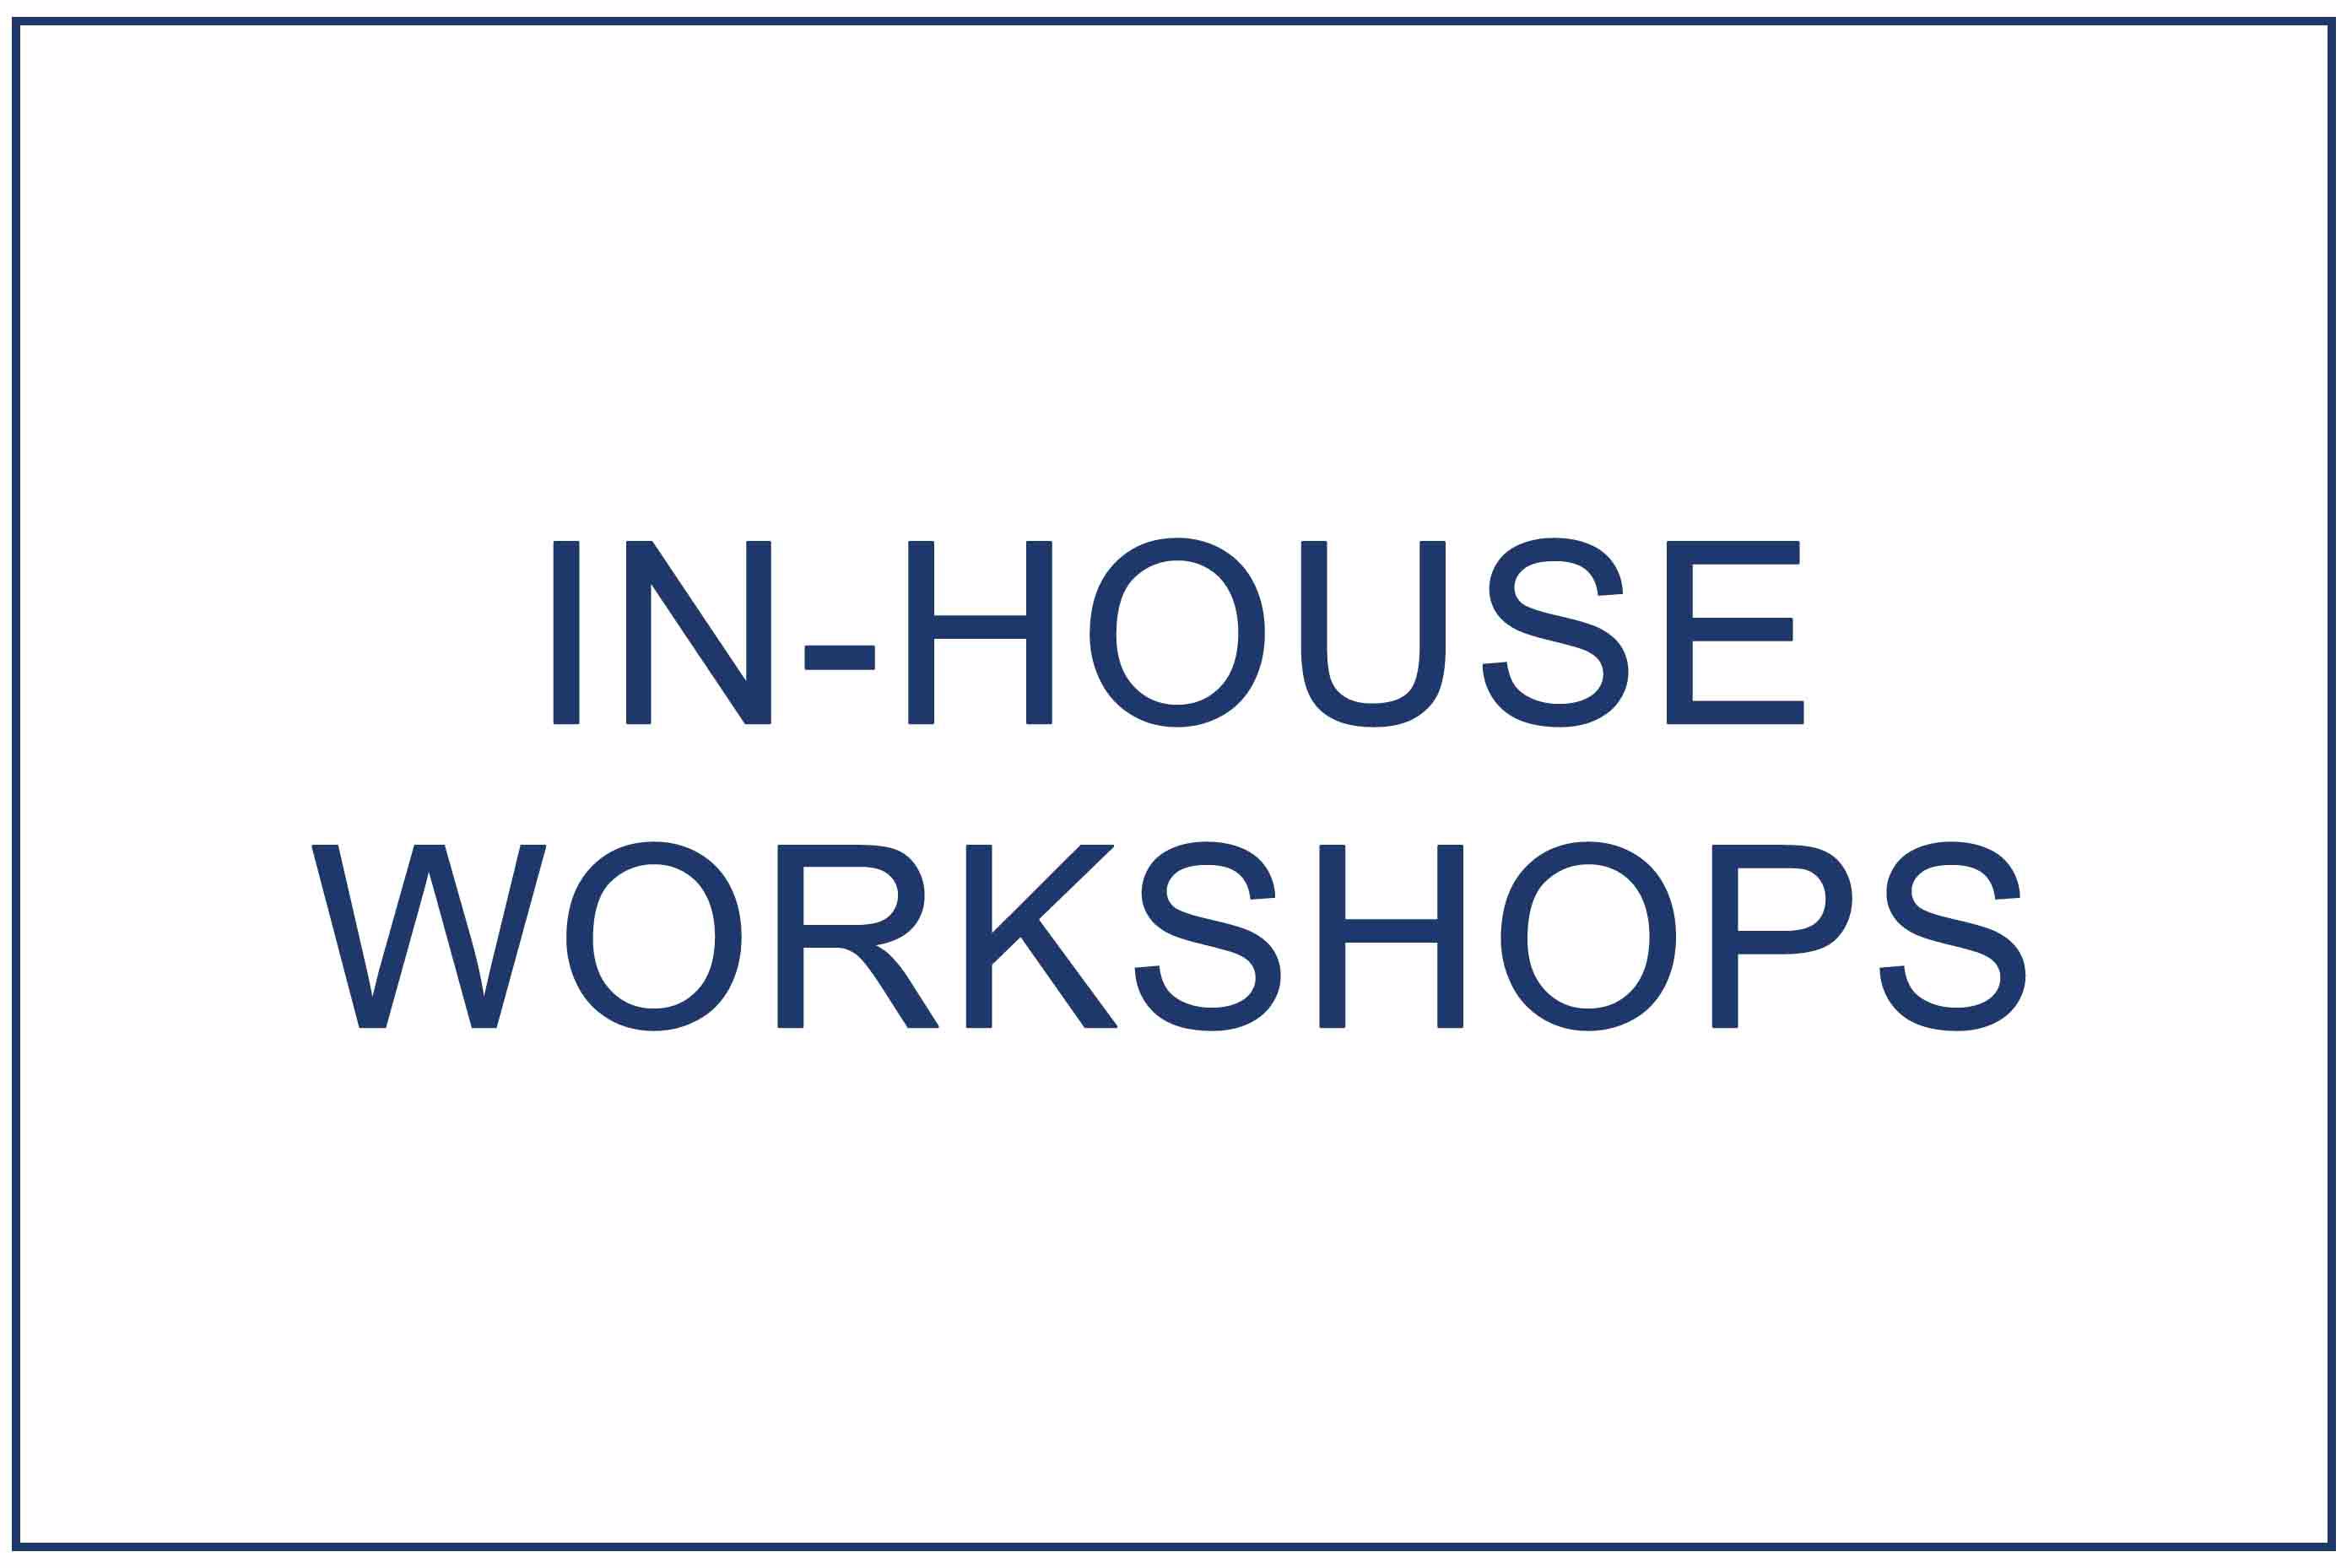 Inhouse workshops